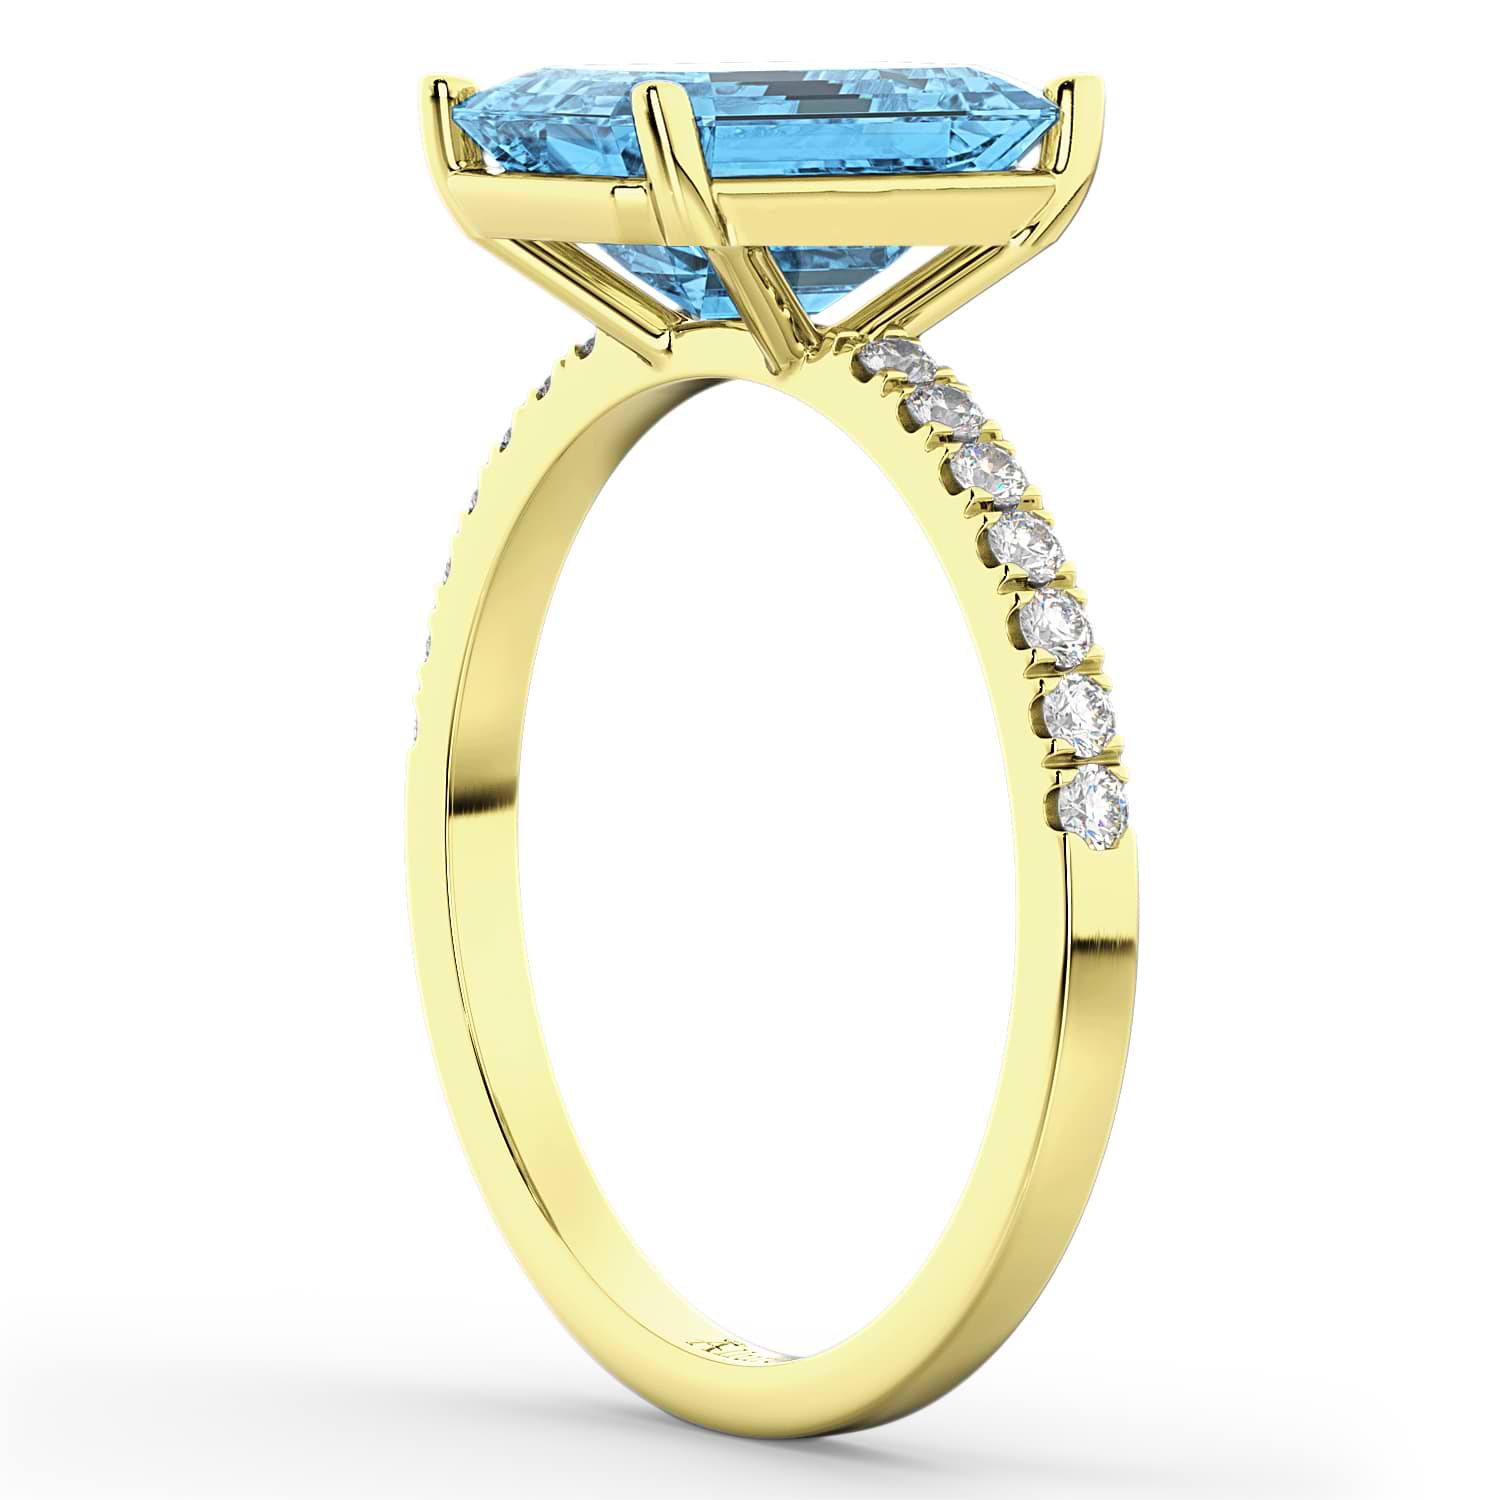 Emerald Cut Blue Topaz & Diamond Engagement Ring 18k Yellow Gold (2.96ct)